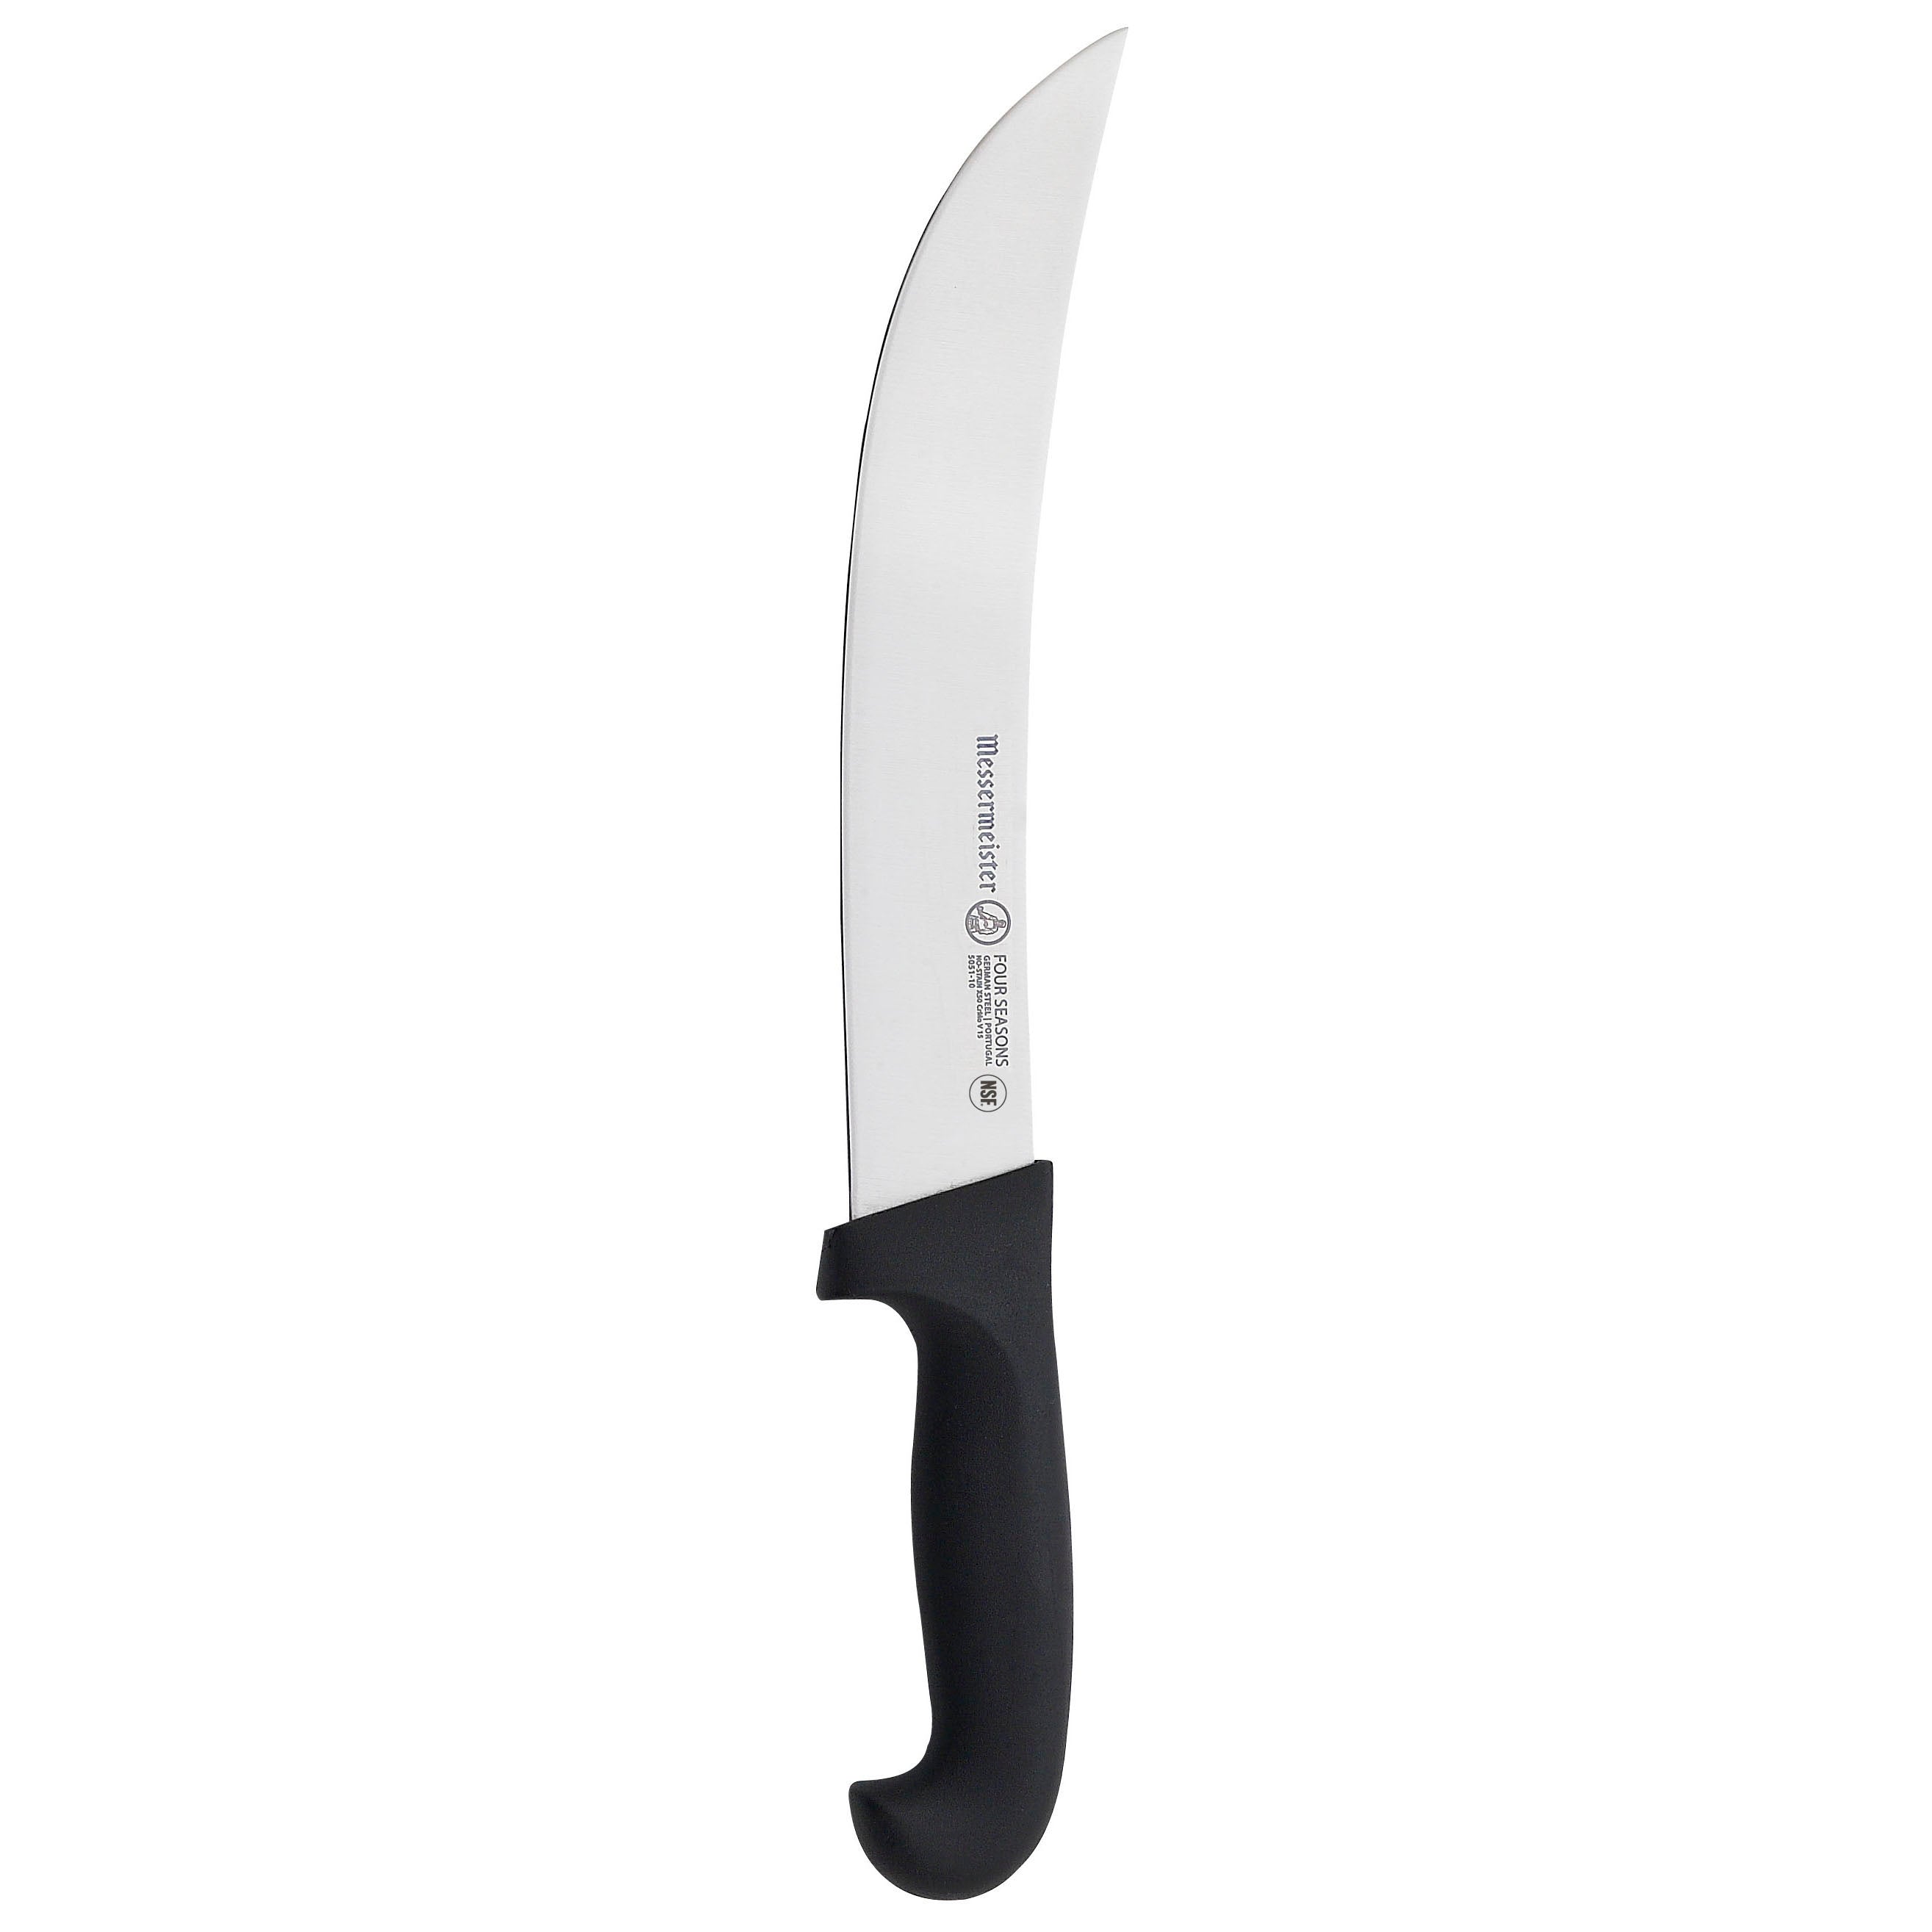 Ultimatedge Knives Sharpest Knife Ever